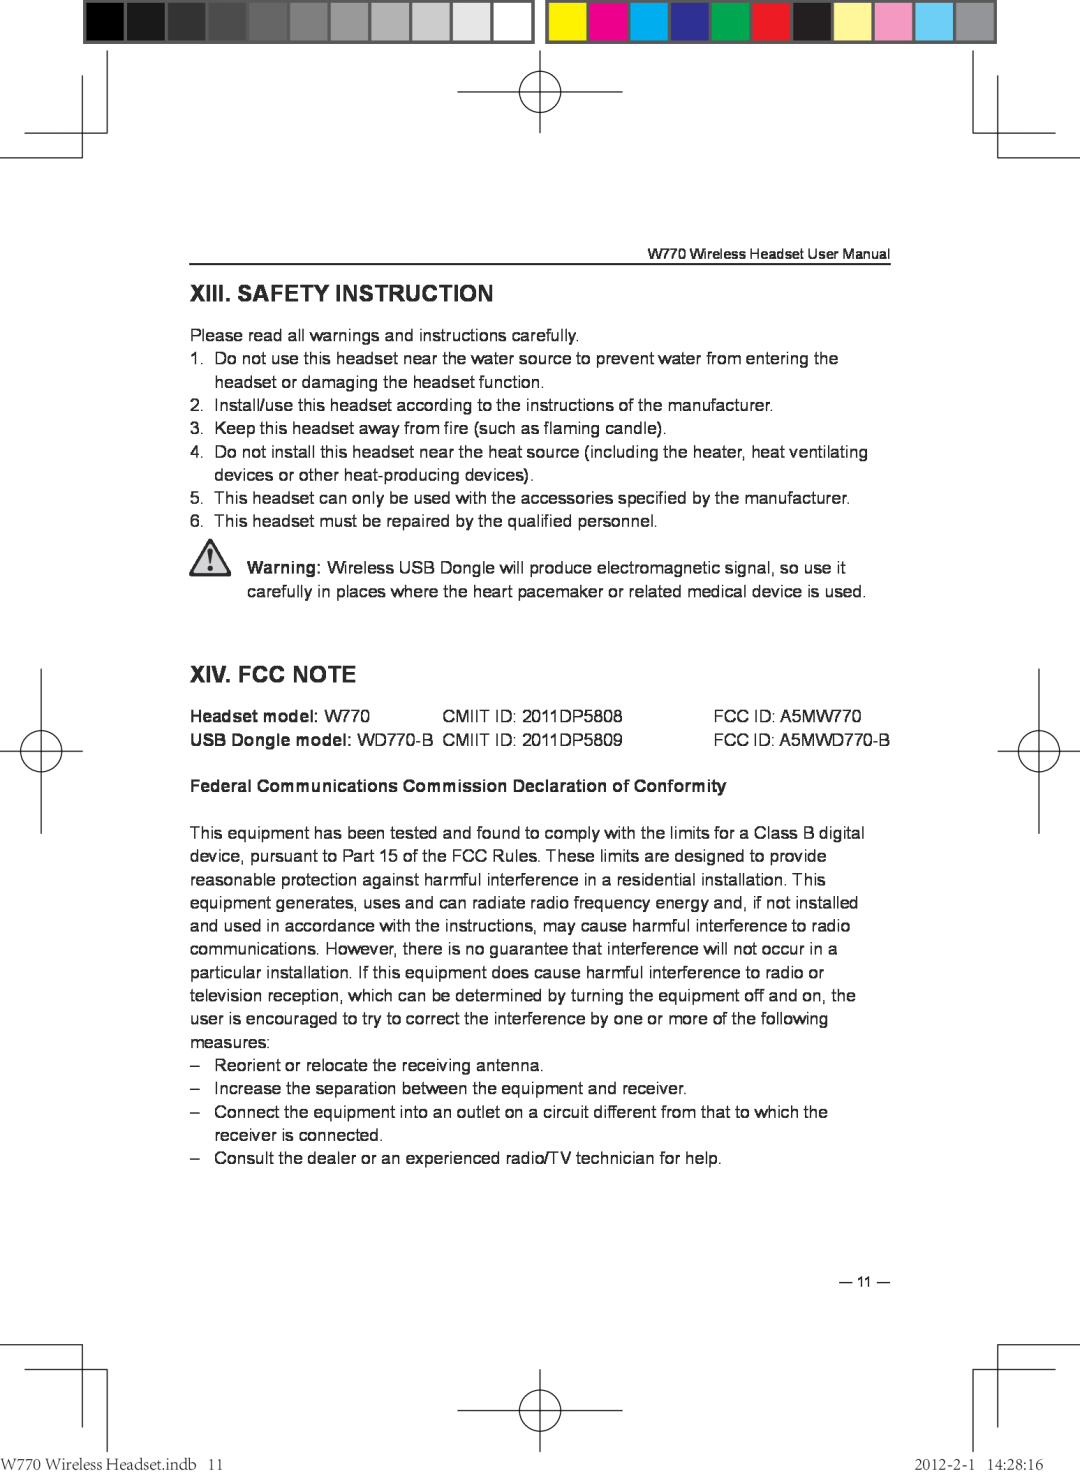 Lenovo user manual XIII. Safety instruction, XIV. FCC Note, Headset model W770 